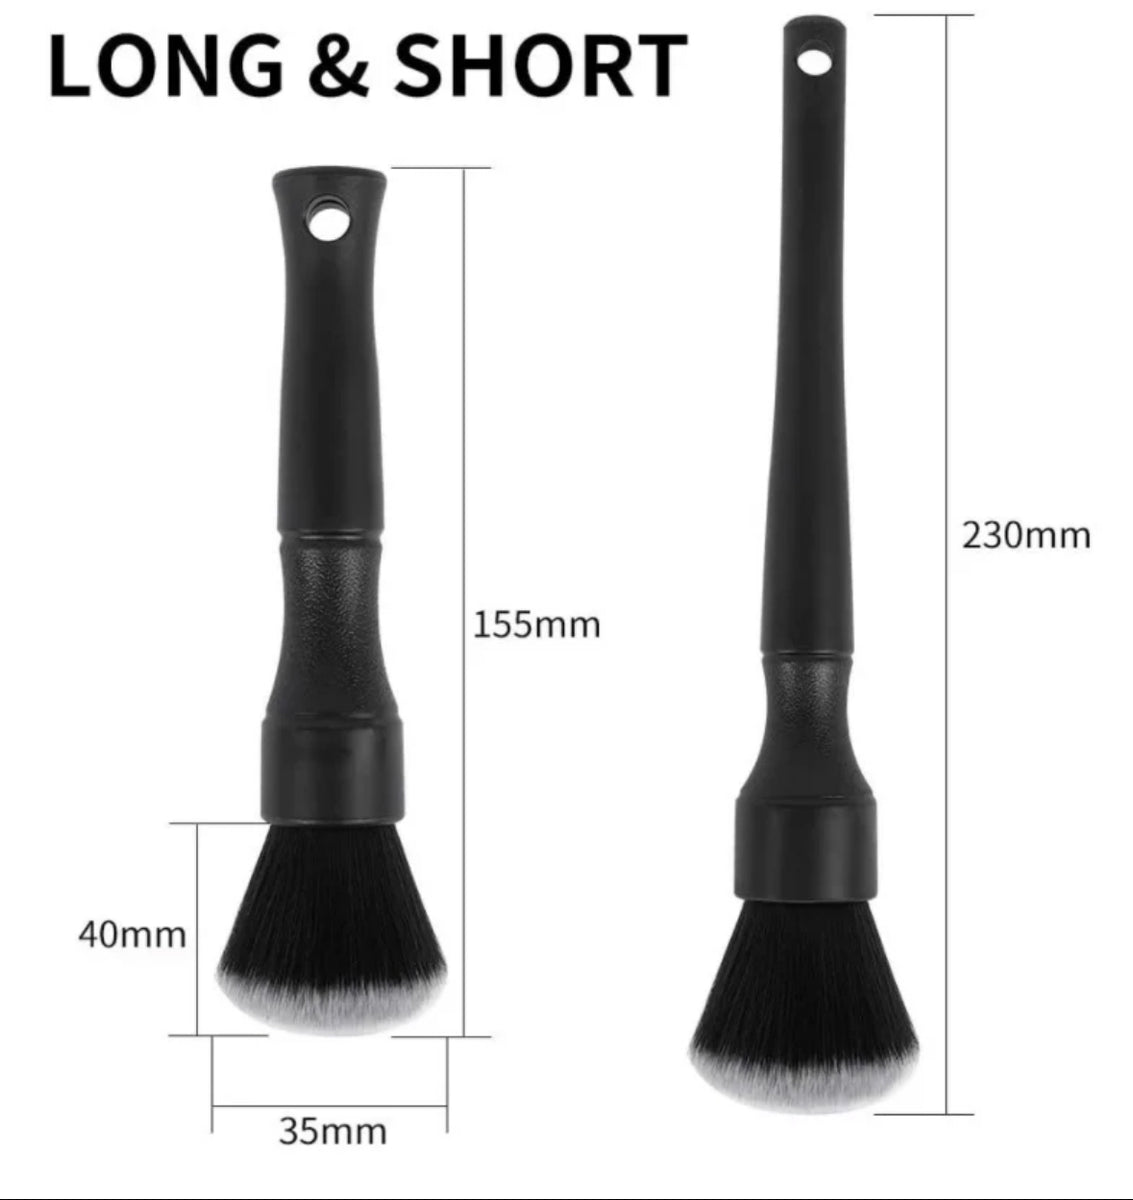 Cepillo de detalle ultra suave en negro set / The Detail Plug ultra soft detail brush black set - The Detail Plug 